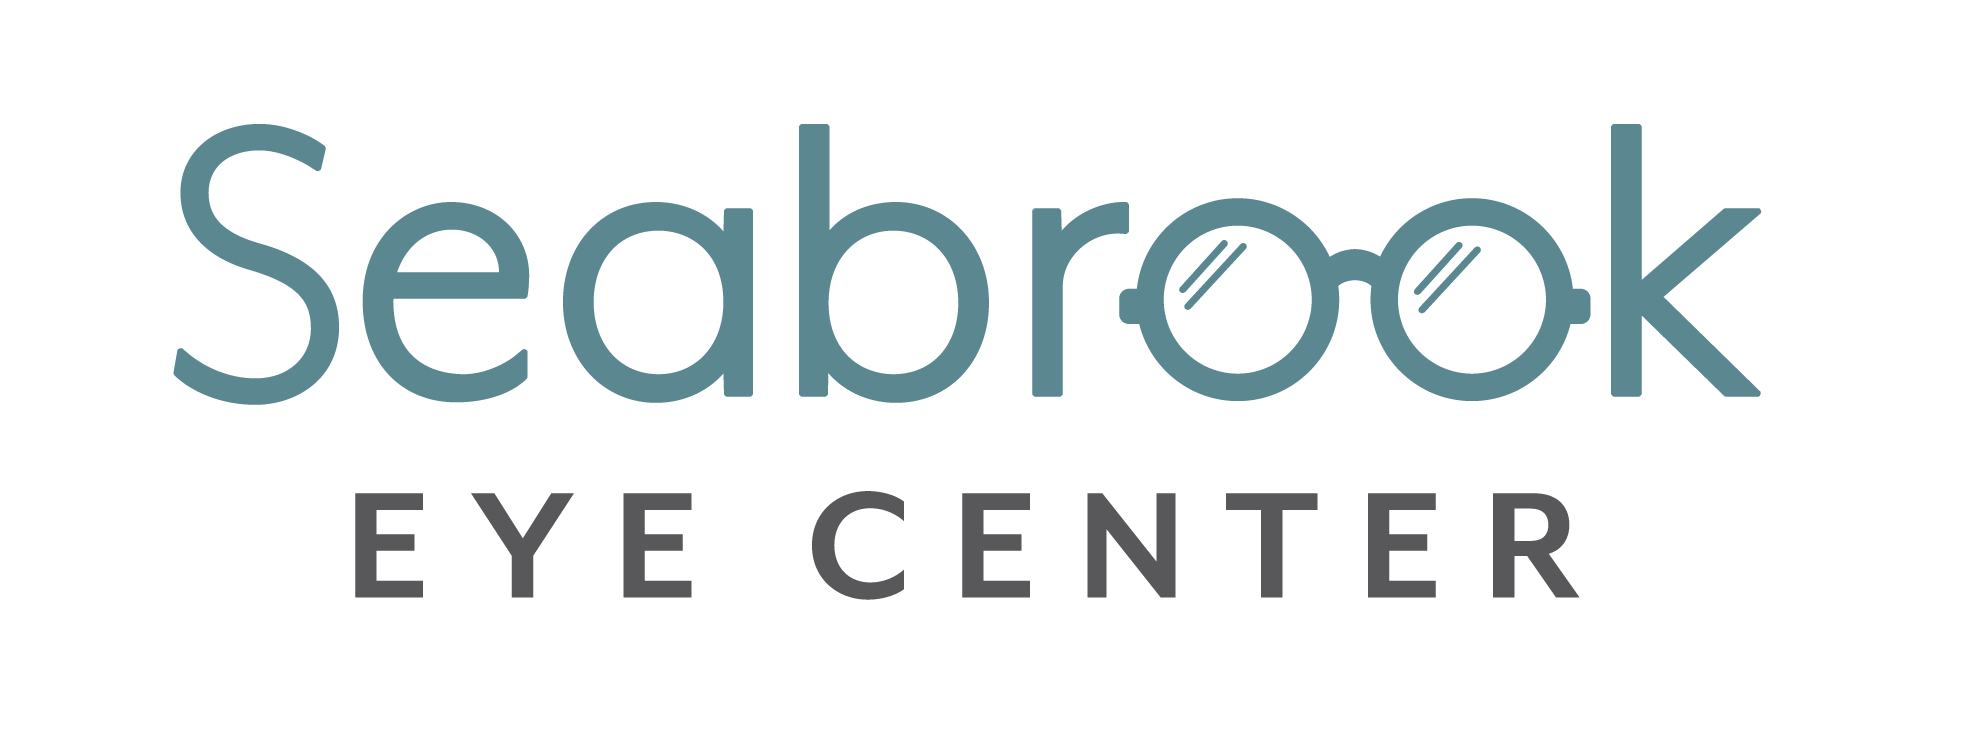 Seabrook Eye Center Logo